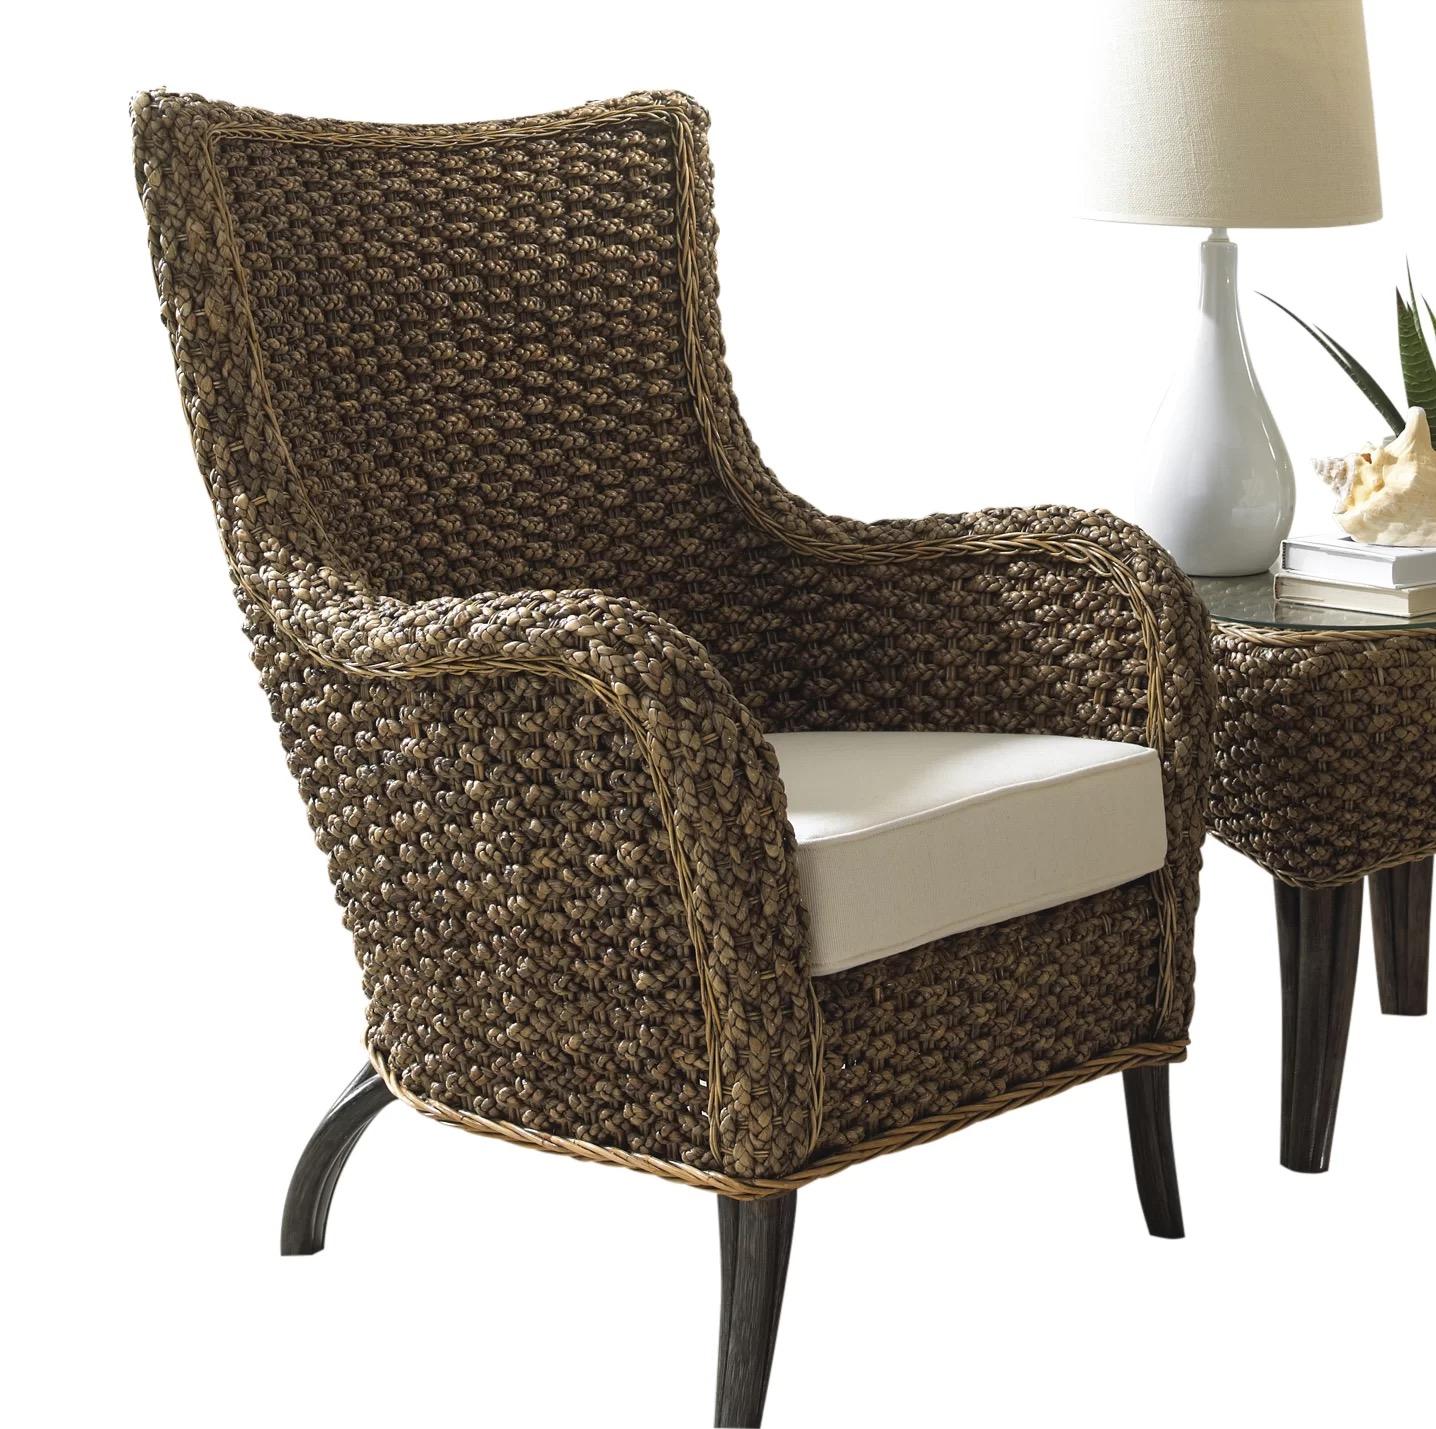 Classic Outdoor Chair Sanibel PJS-1001-ATQ-LC in Brown, Beige Fabric